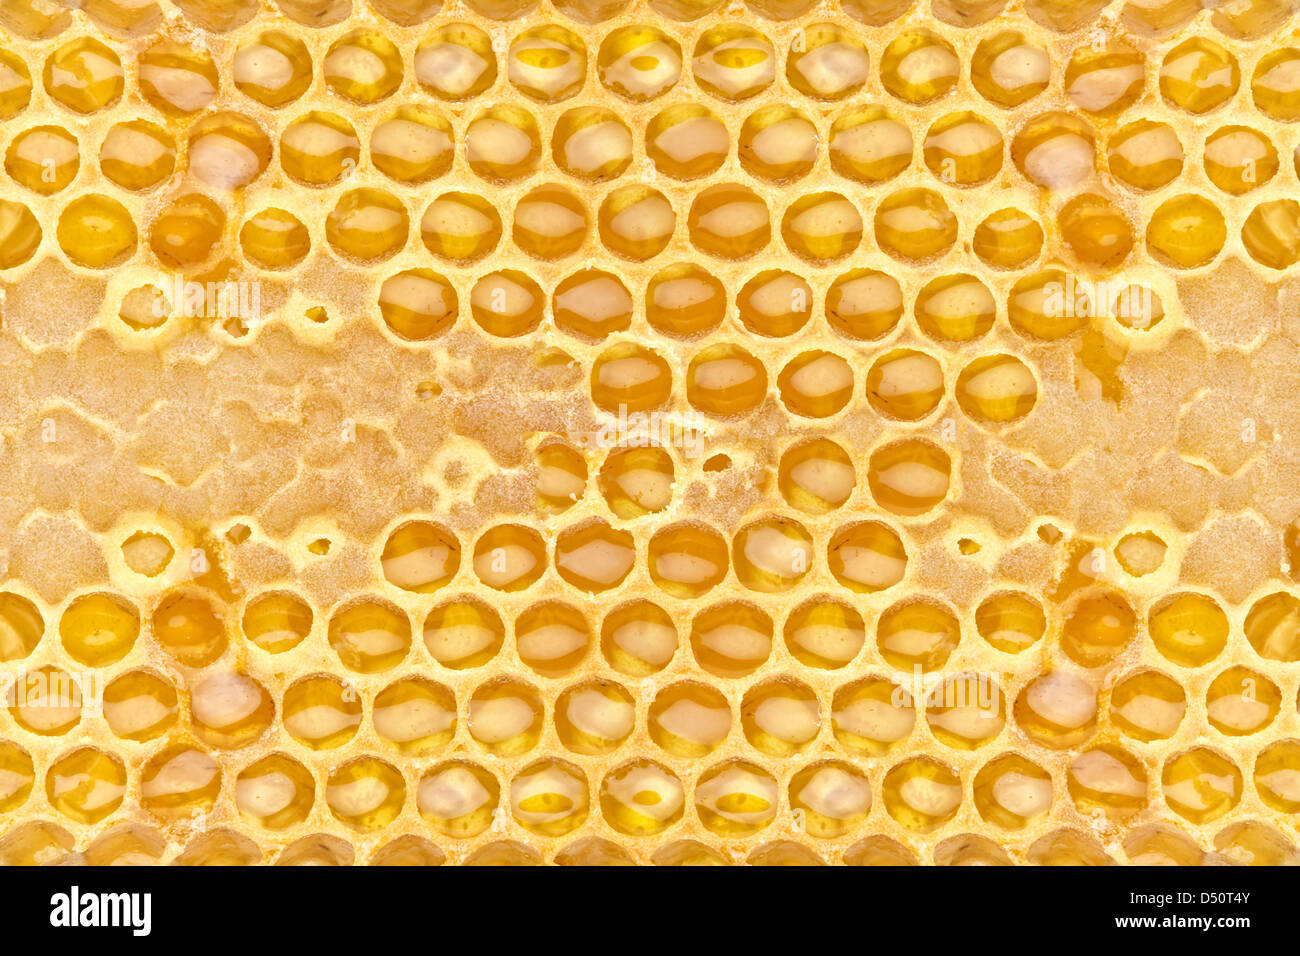 fresh honeycom texture close up Stock Photo